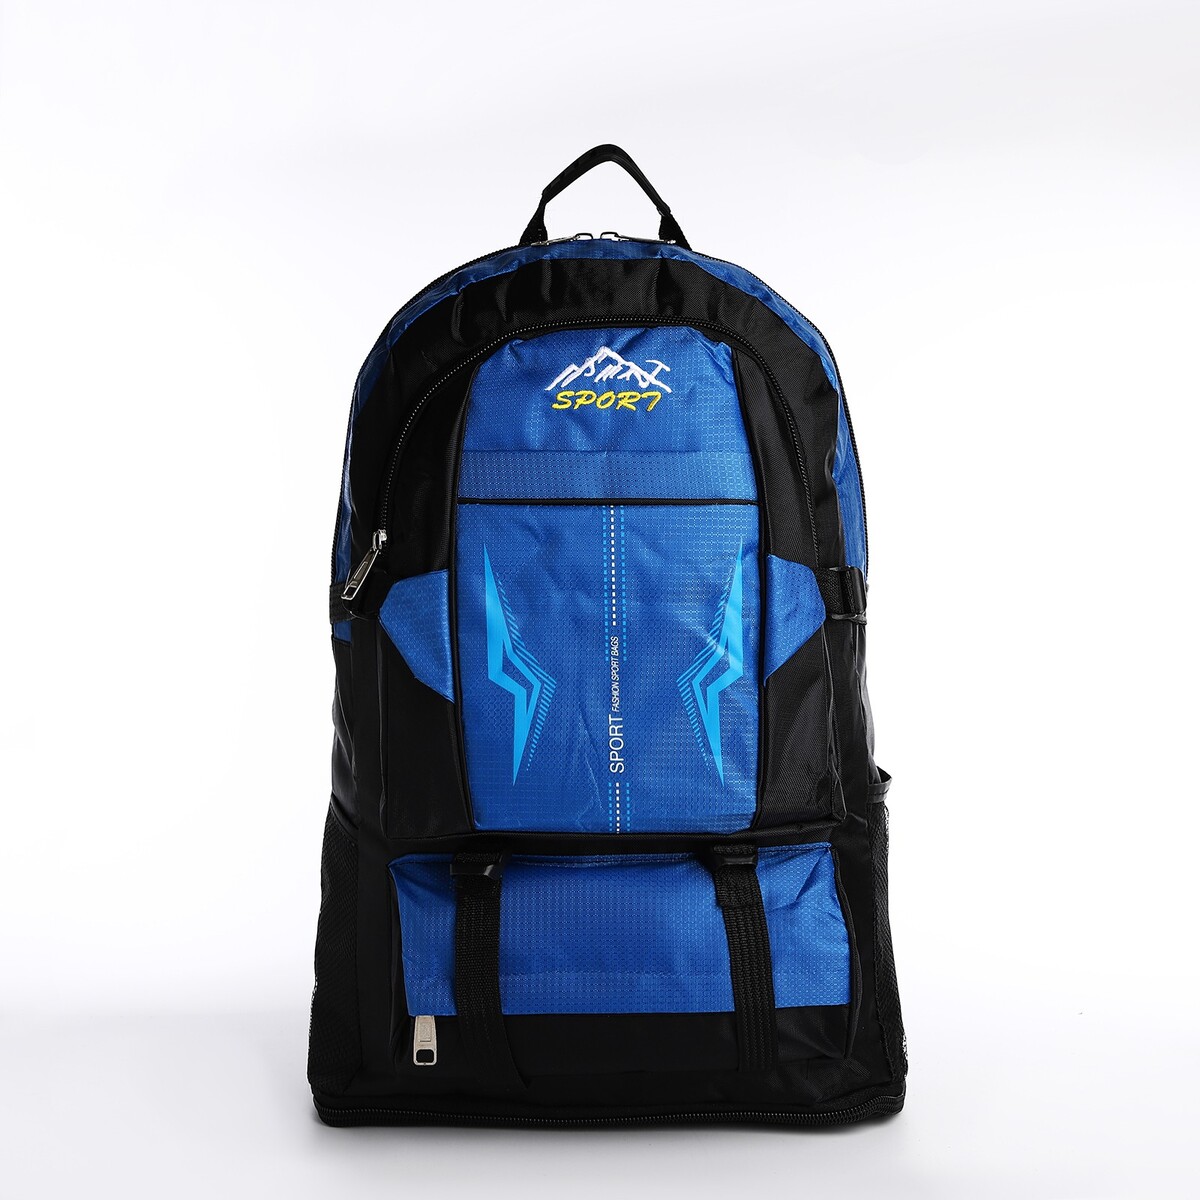 Рюкзак на молнии с увеличением, 65л, 4 наружных кармана, цвет синий